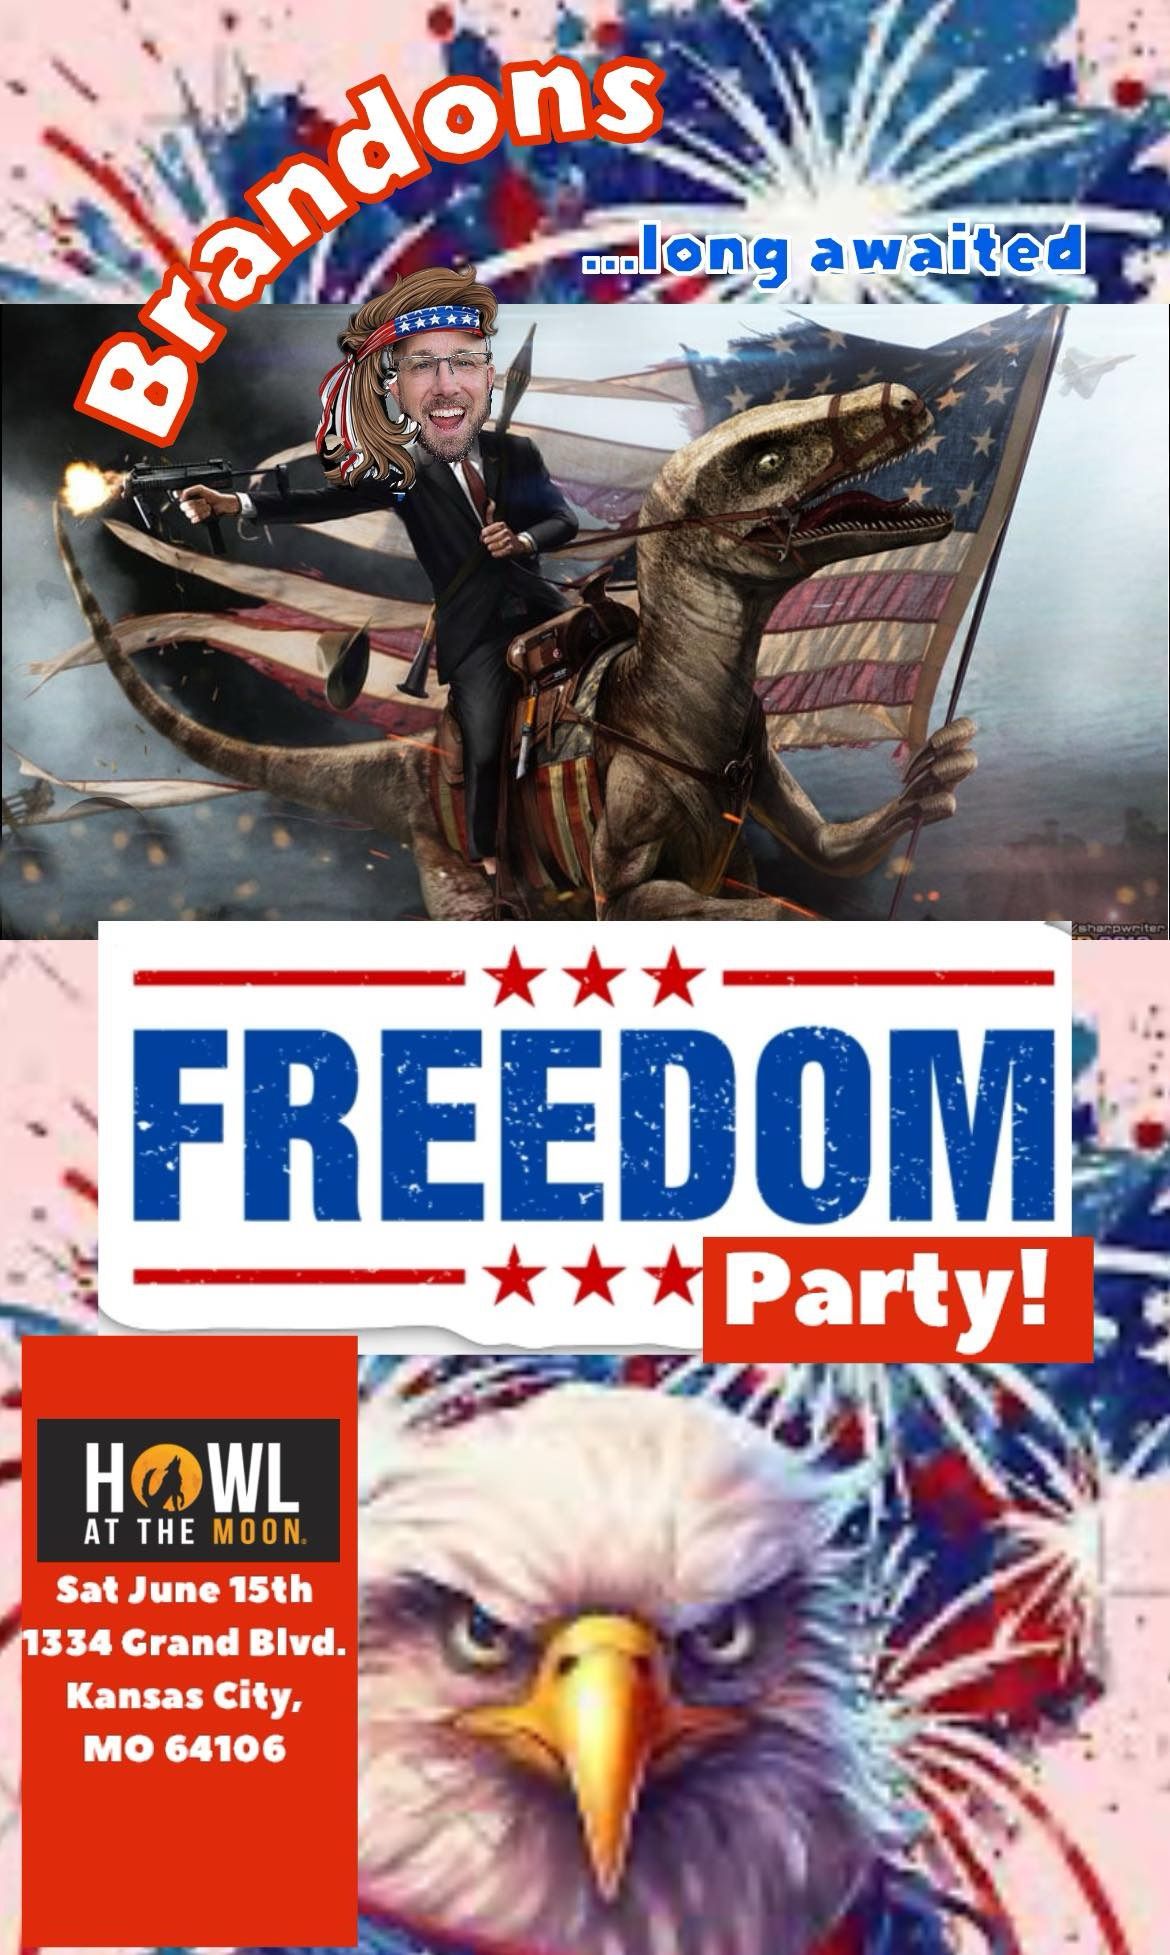 Brandons Freedom Party!